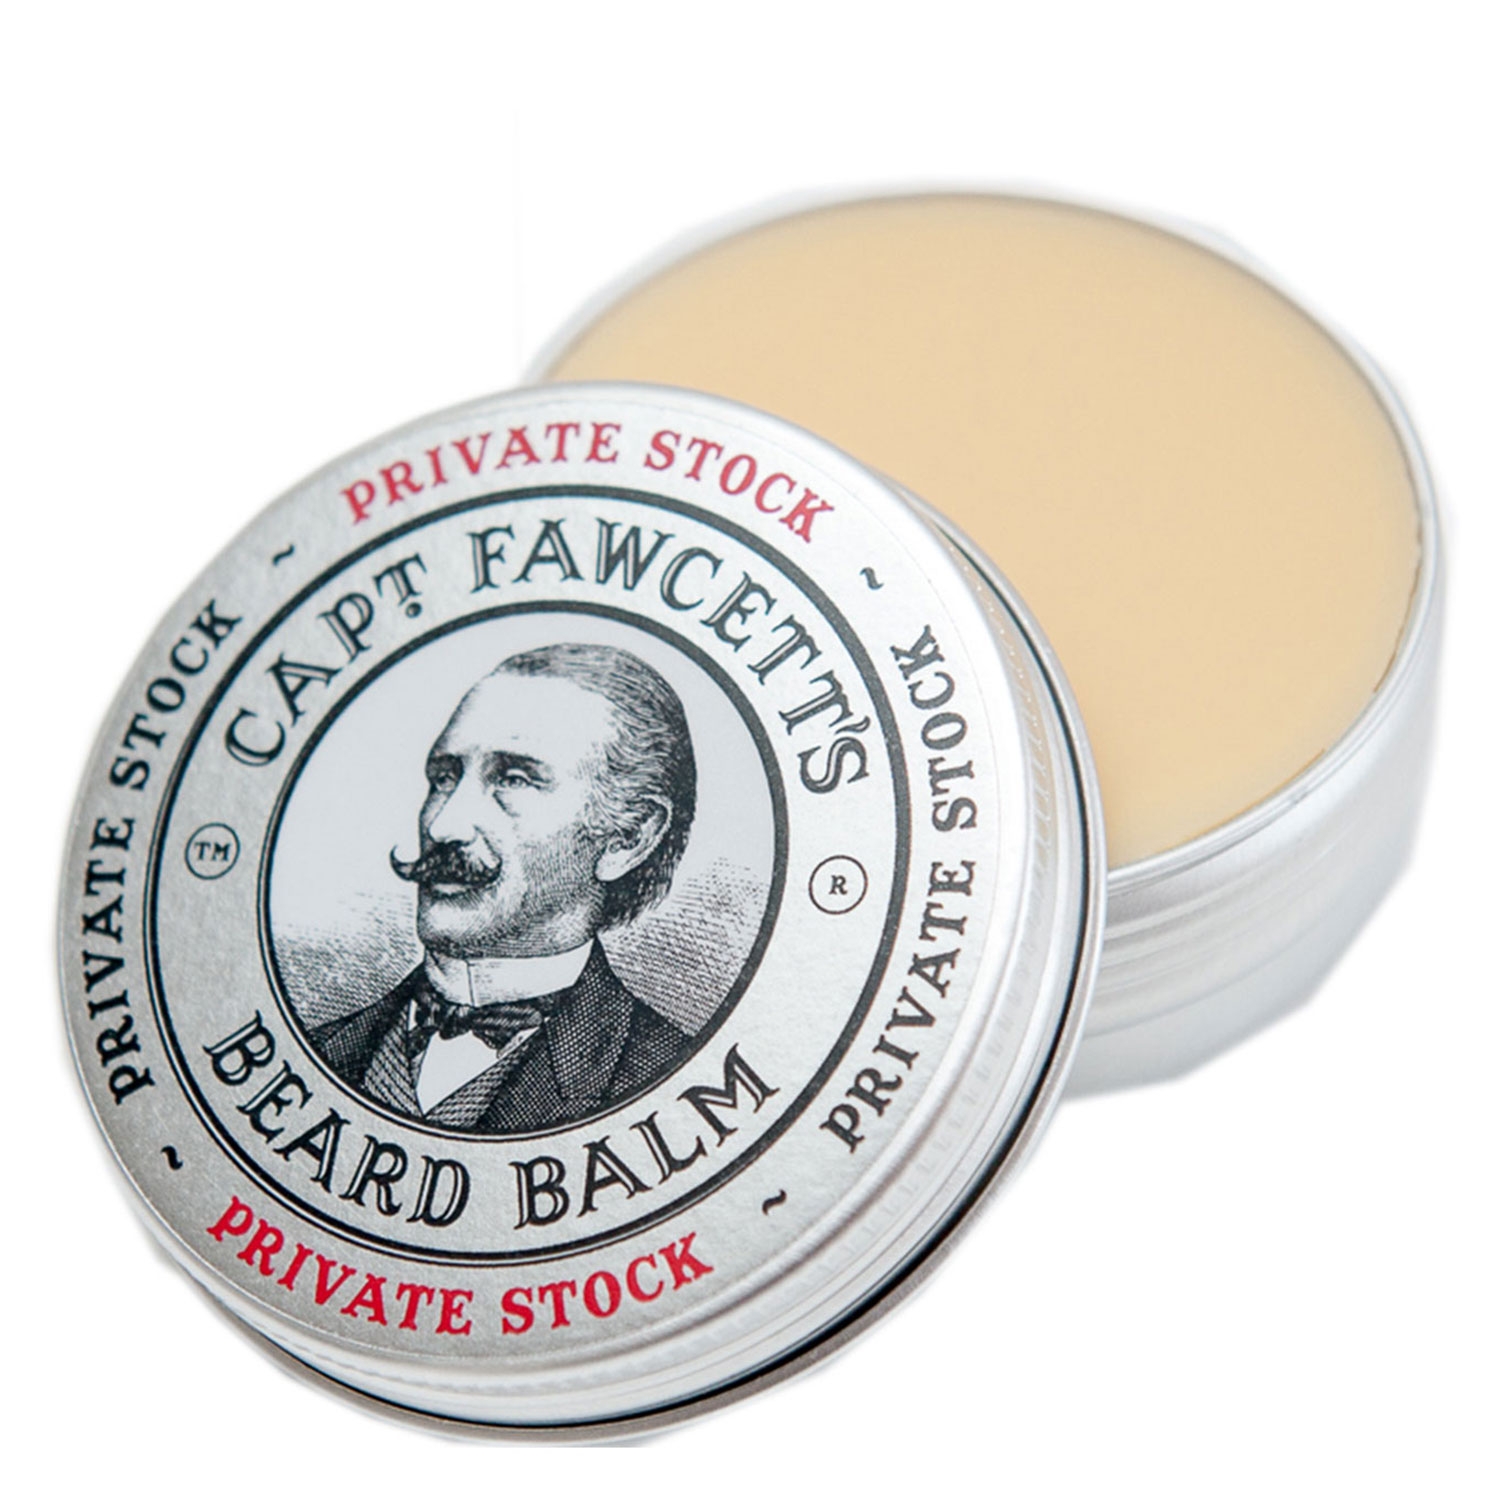 Produktbild von Capt. Fawcett Care - Private Stock Beard Balm